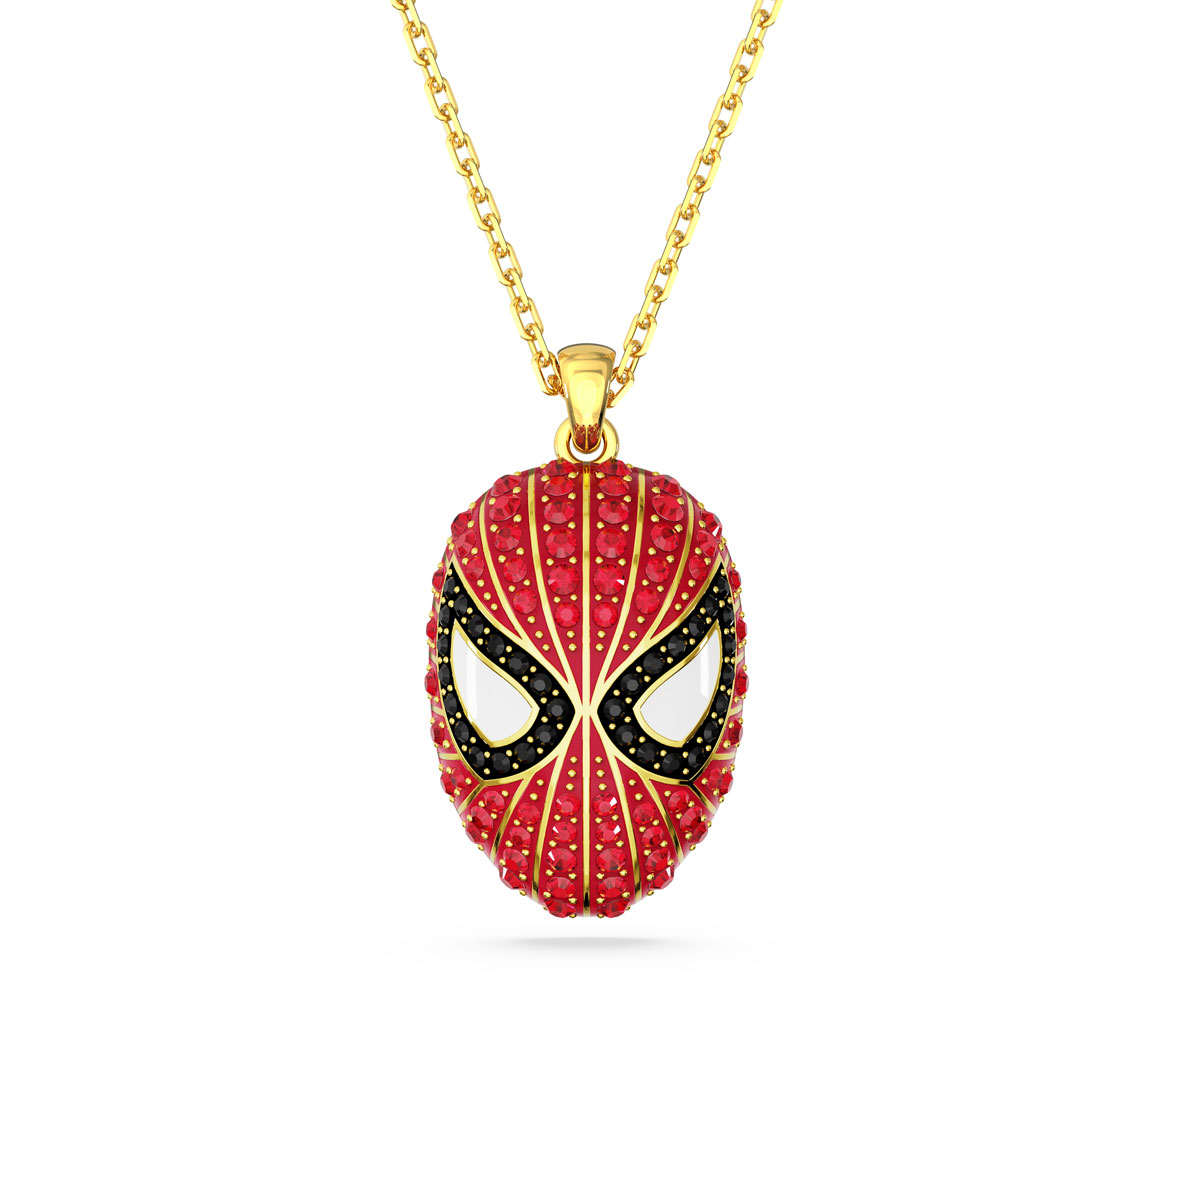 Swarovski Jewelry Necklace Marvel Pendant Spider-Man Gold